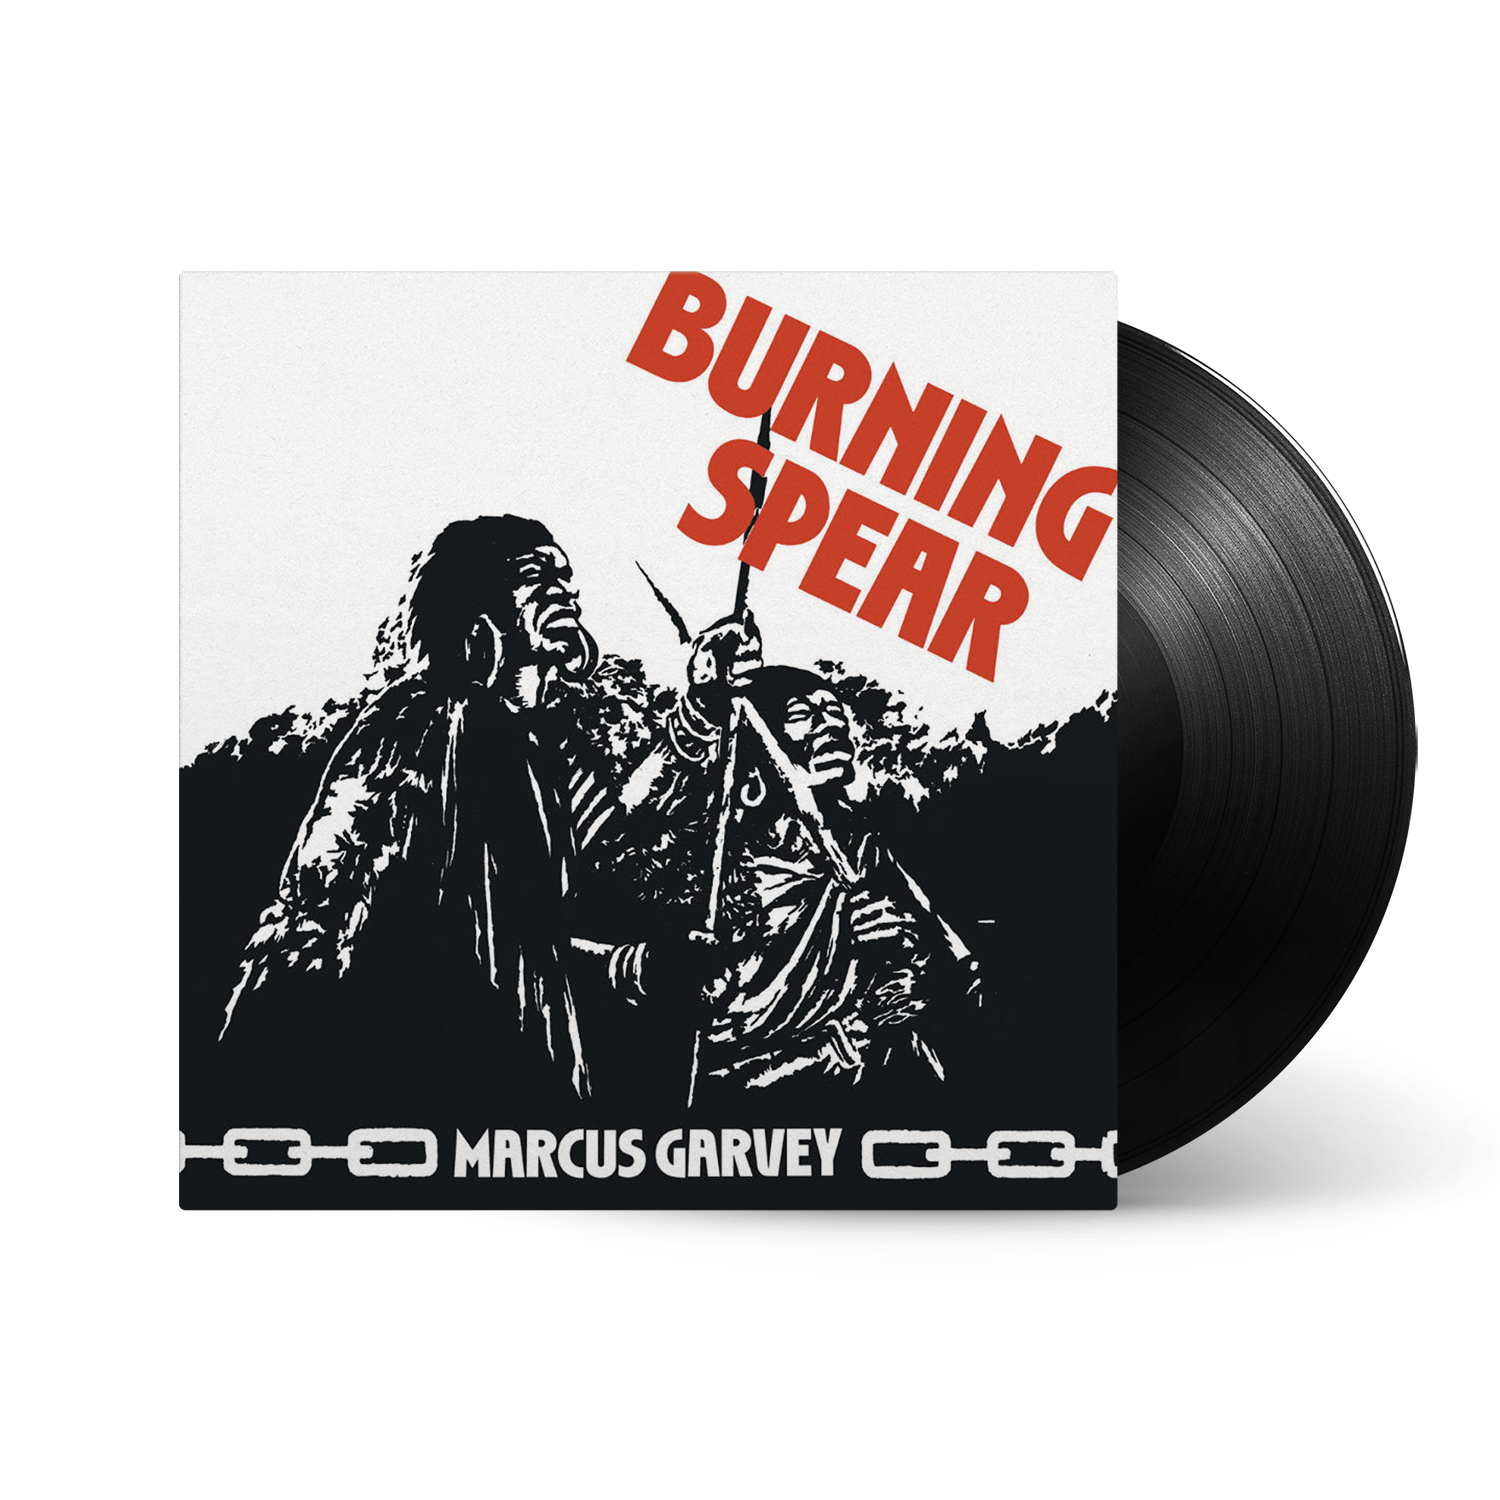 Burning Spear - Marcus Garvey: Vinyl LP